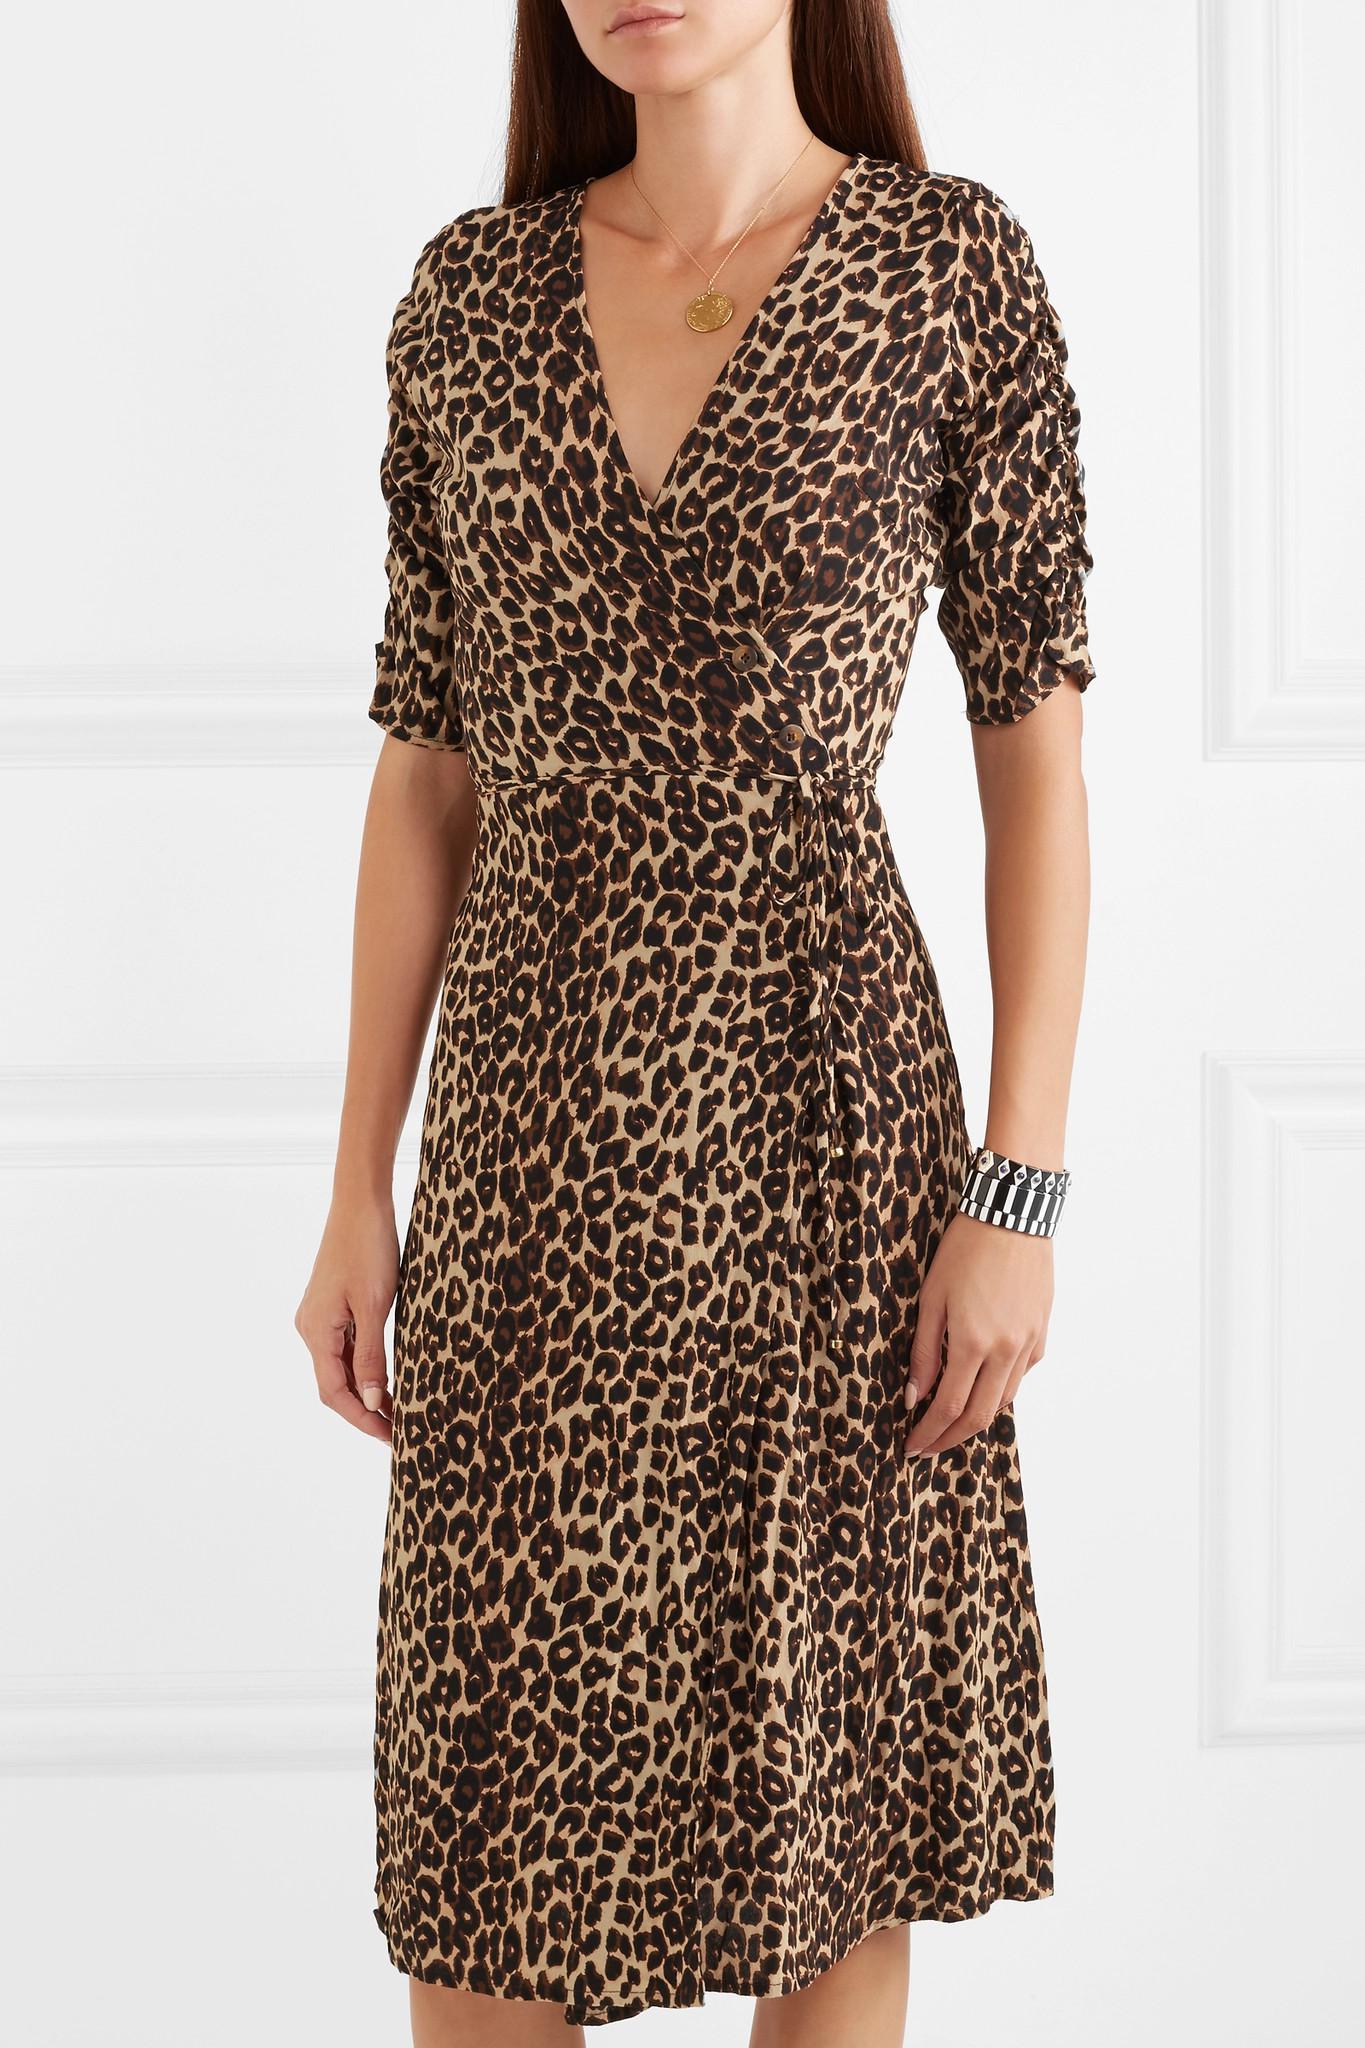 faithfull leopard dress